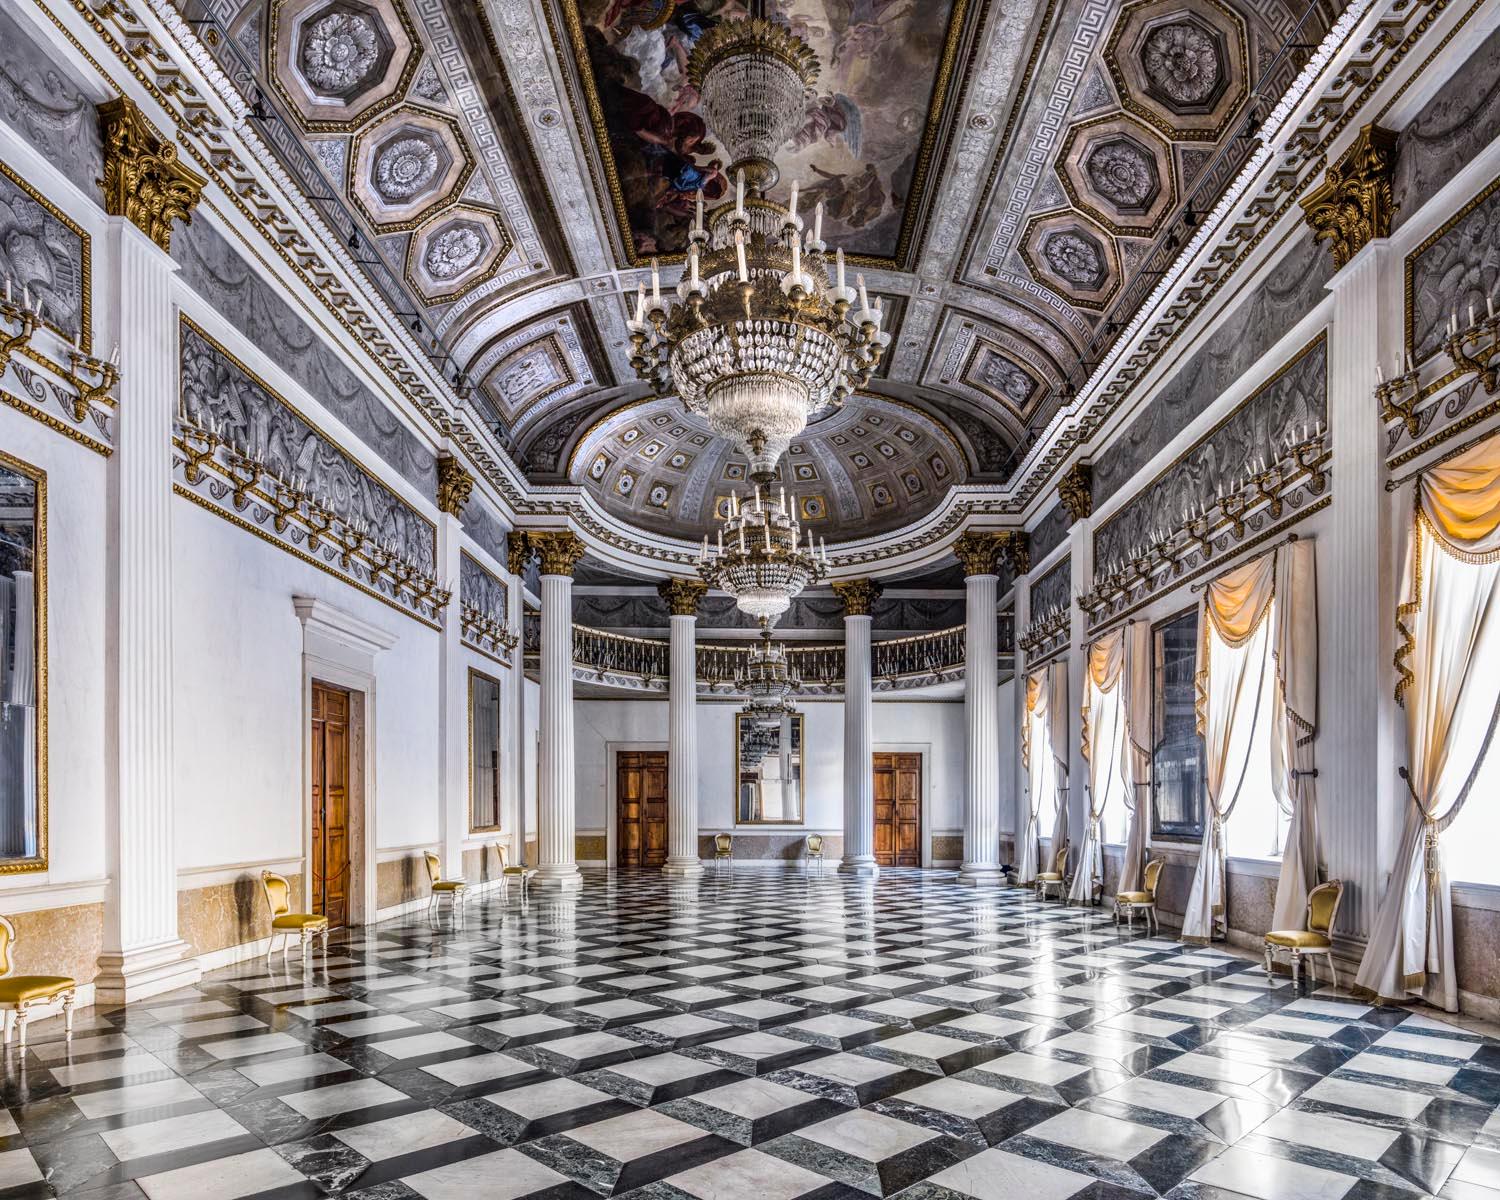 Massimo Listri Color Photograph - Palazzo Reale, Venice, Italy (Portrait of Interiors, Photography)